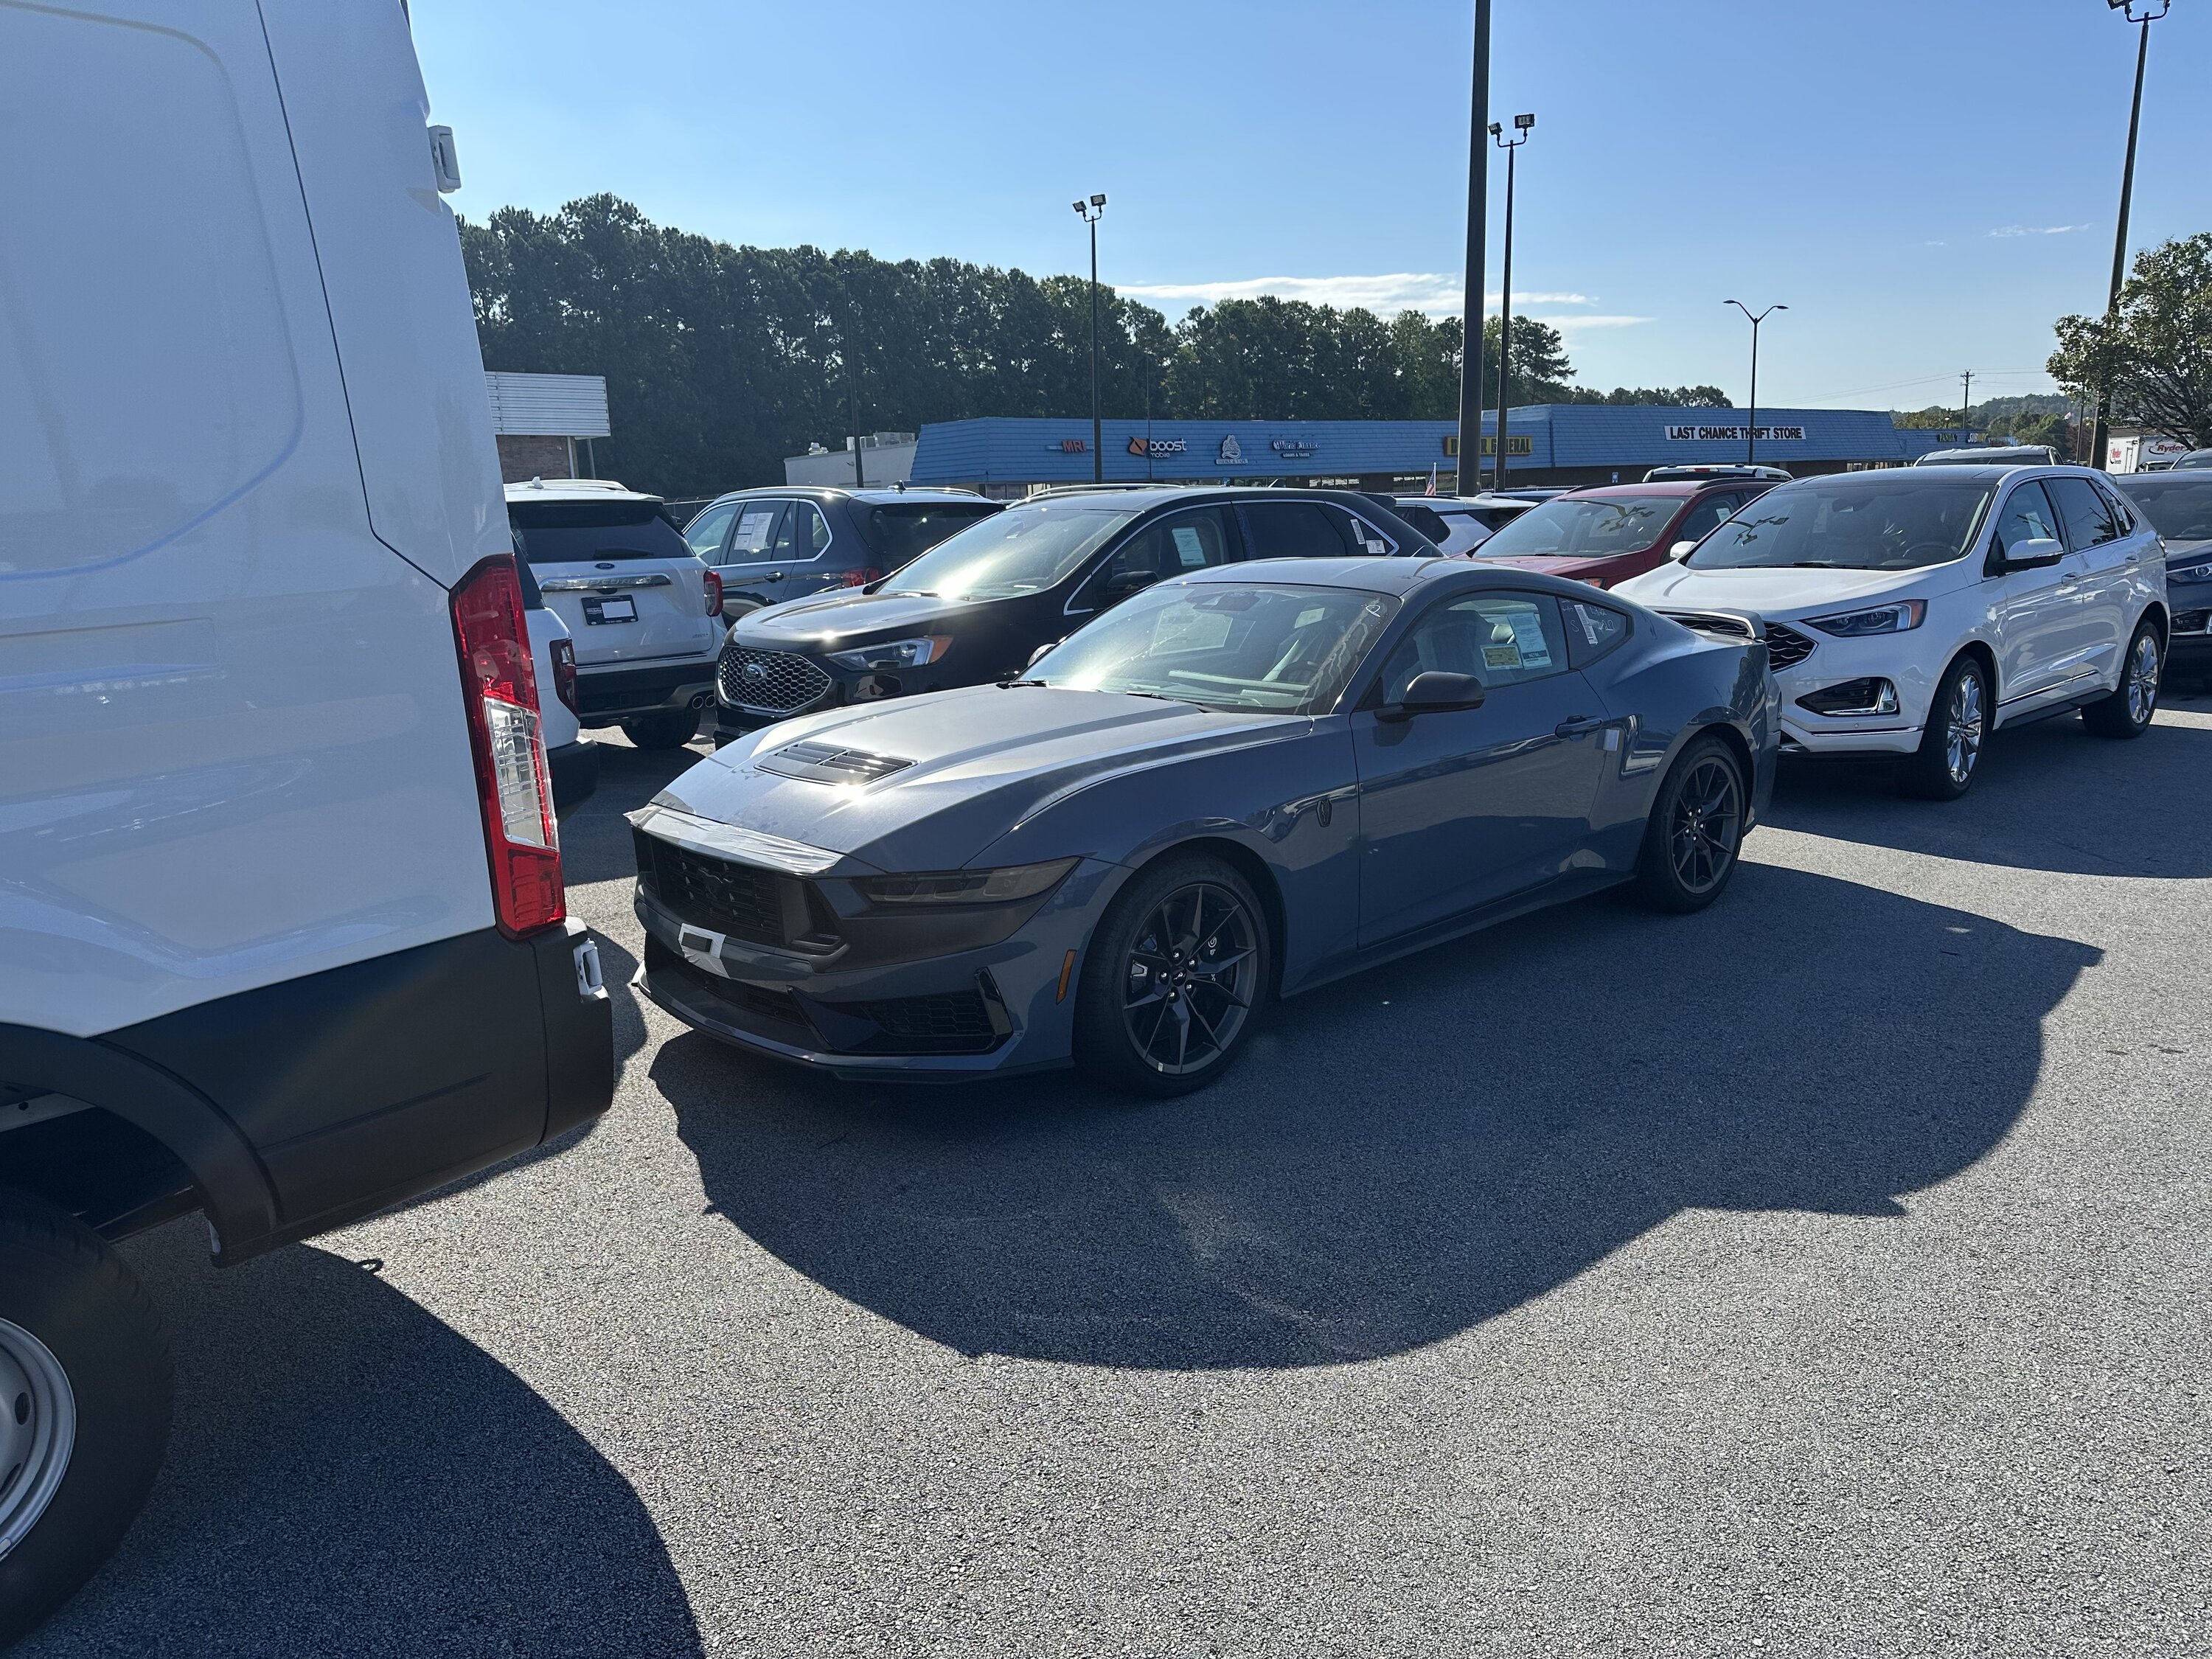 S650 Mustang Triple Seven Dark Horse Development Car Arrives! tempImageoZdCzv